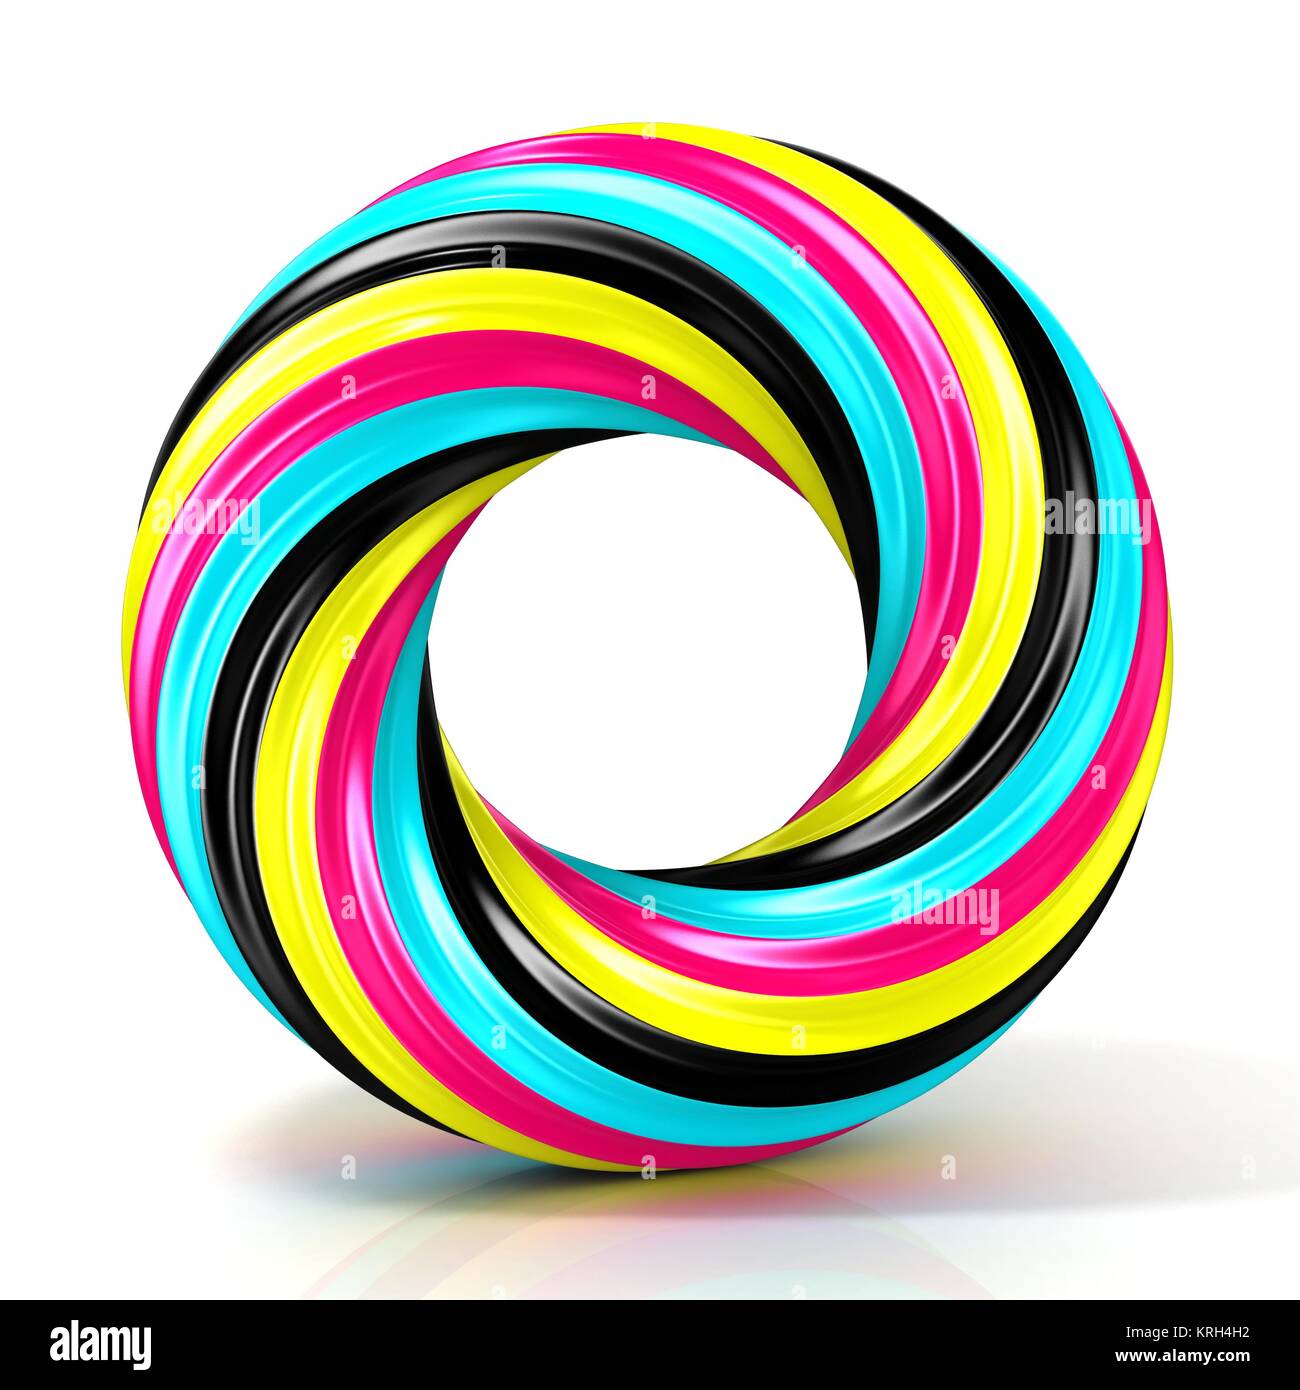 CMYK abstract circular sign, with narrow stripes 3D Stock Photo